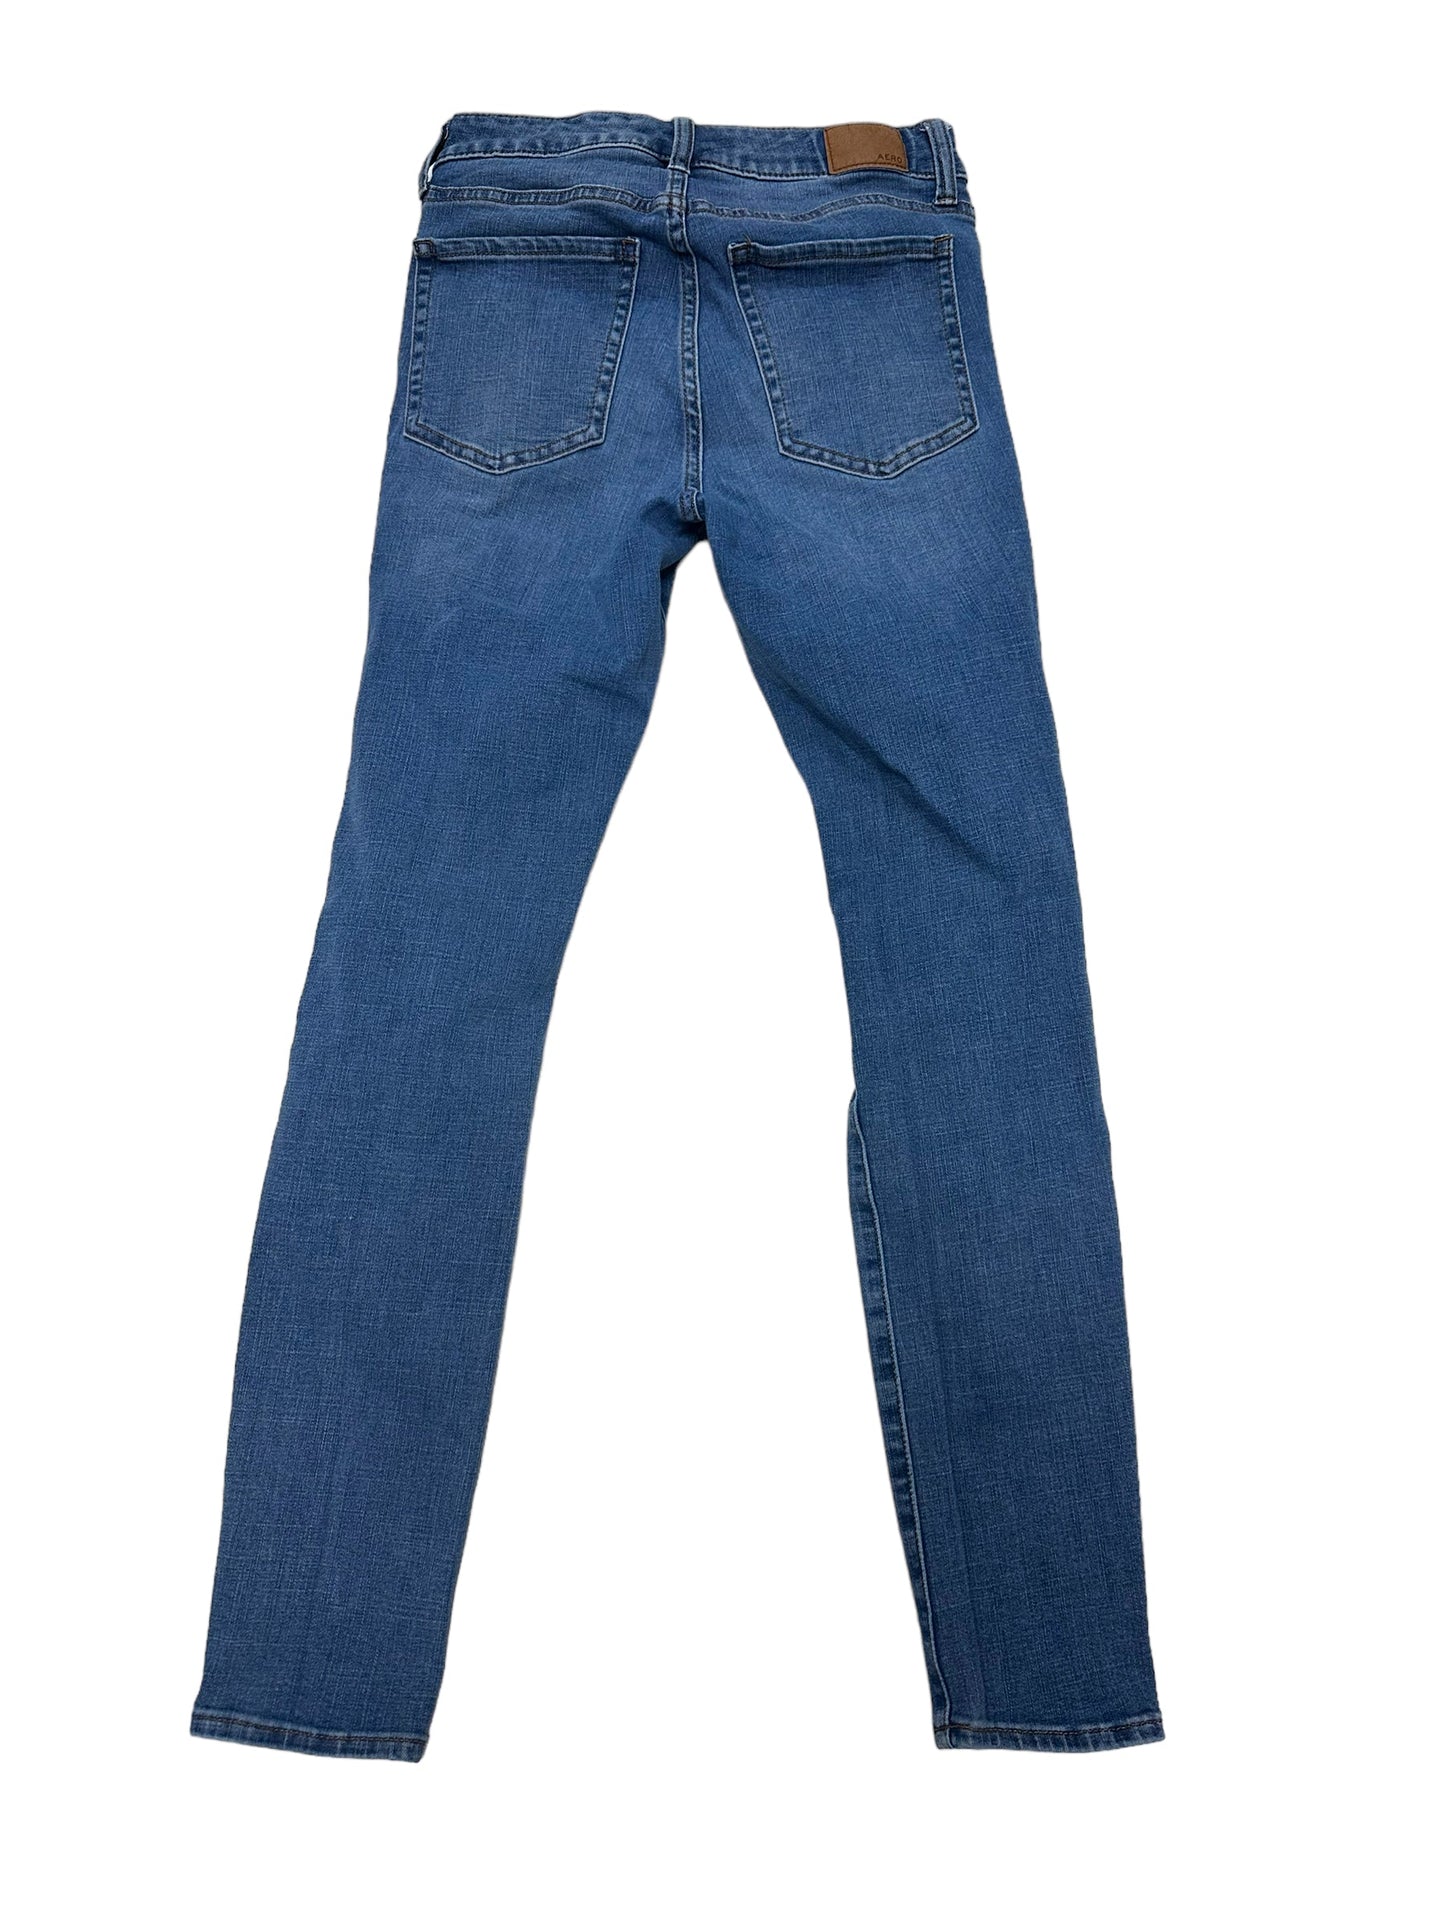 Jeans Skinny By Aeropostale  Size: 8